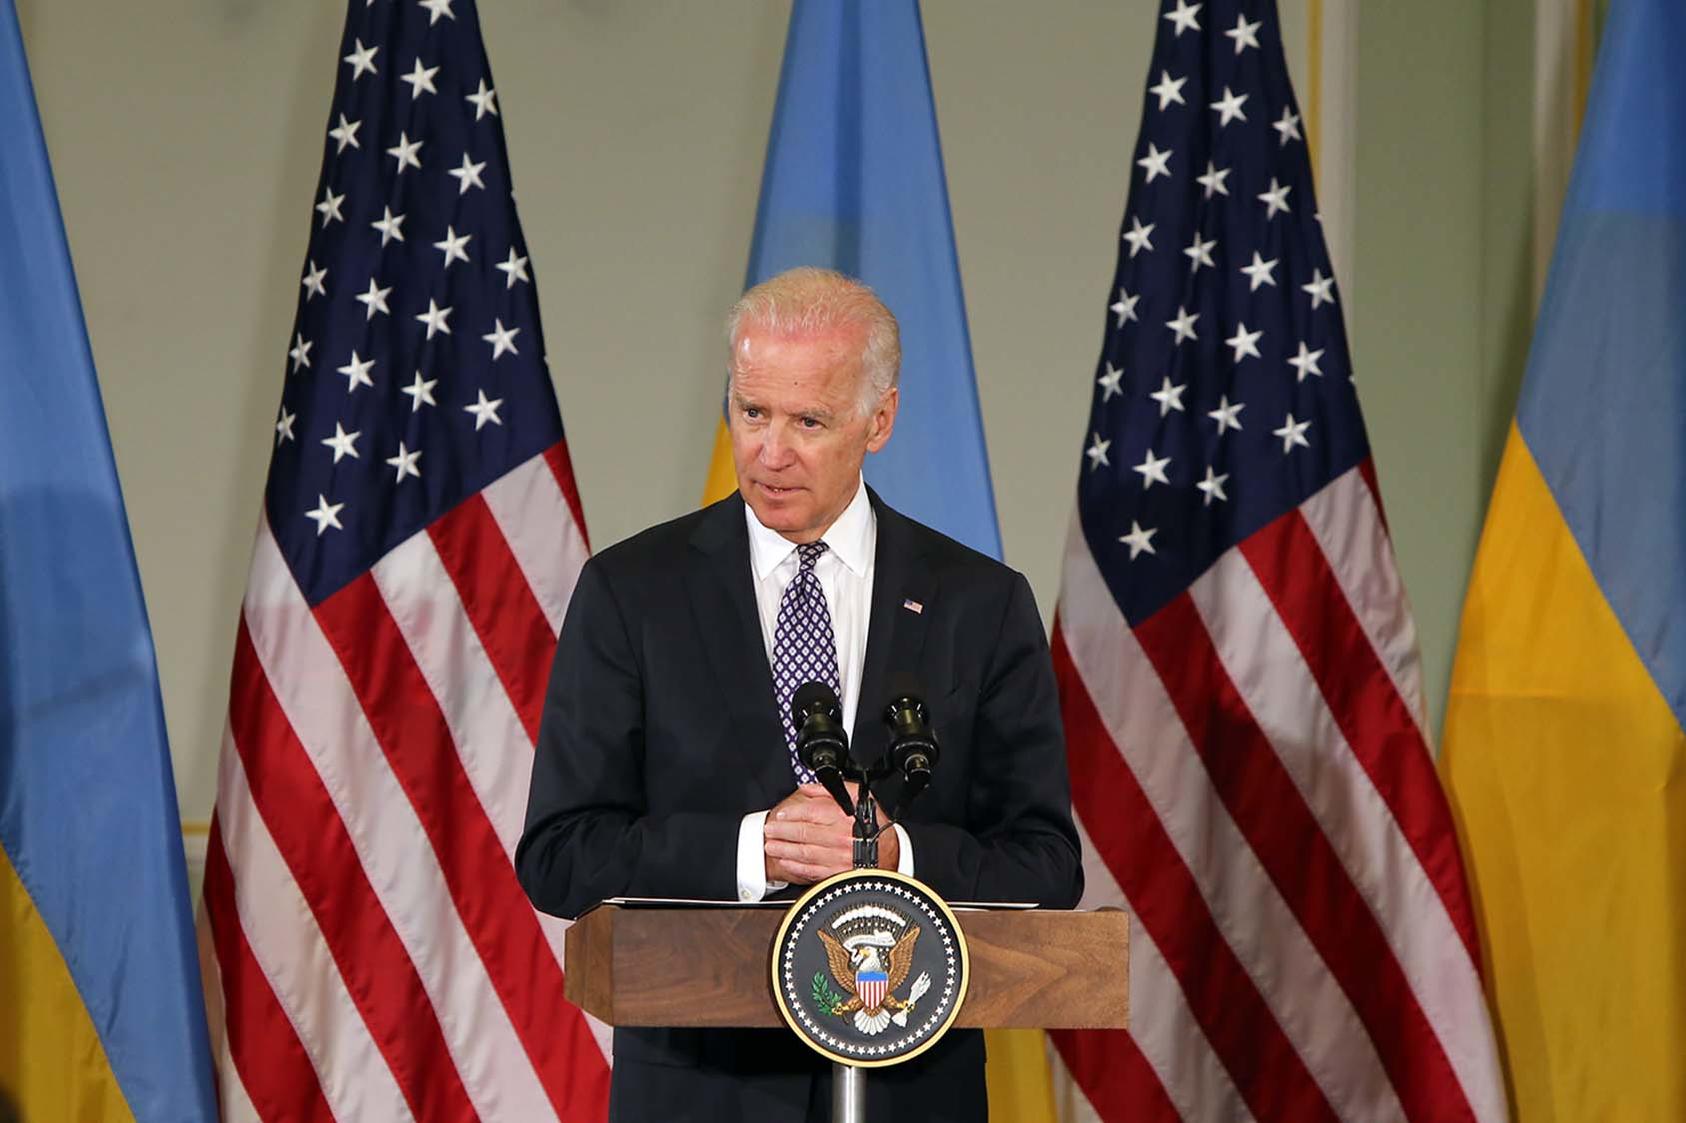 Then-Vice President Joe Biden speaking at the Diplomacy Academy of Ukraine, April 2, 2014 (U.S. Embassy Ukraine)